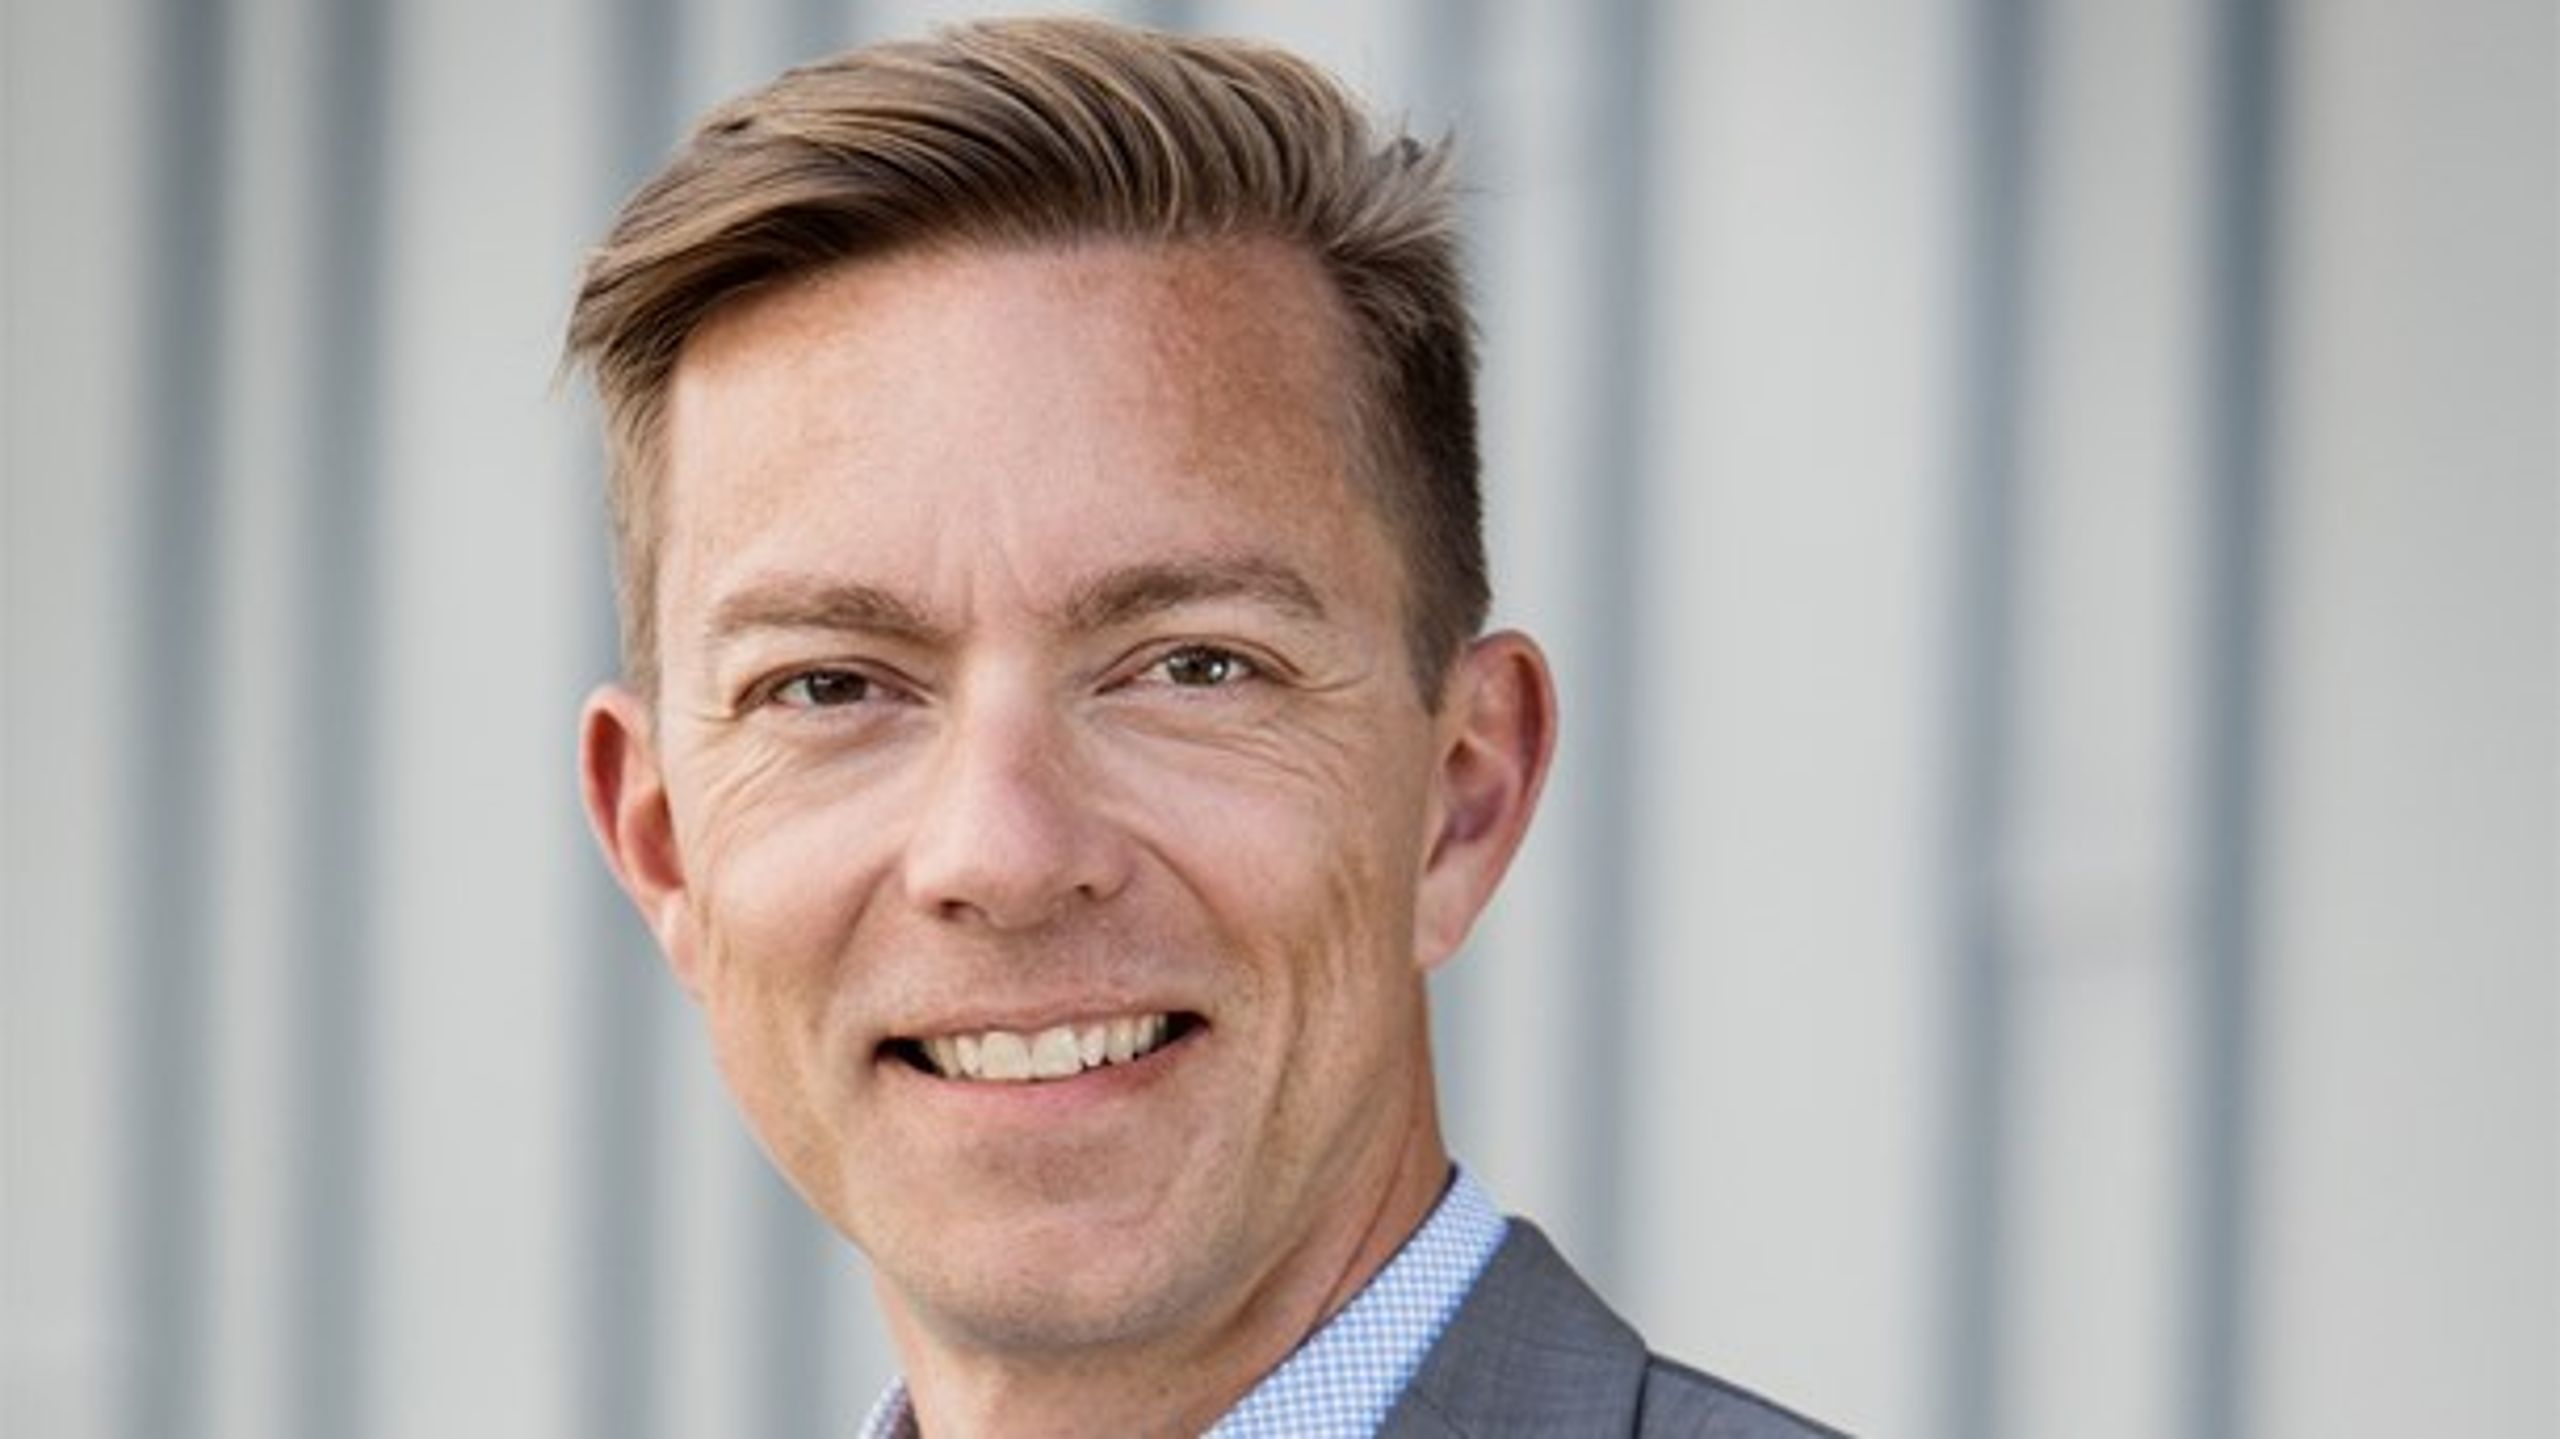 Jakob Østerbye er stoppet i stillingen som kommunikationschef i Banedanmark, som han har bestridt siden 2016.